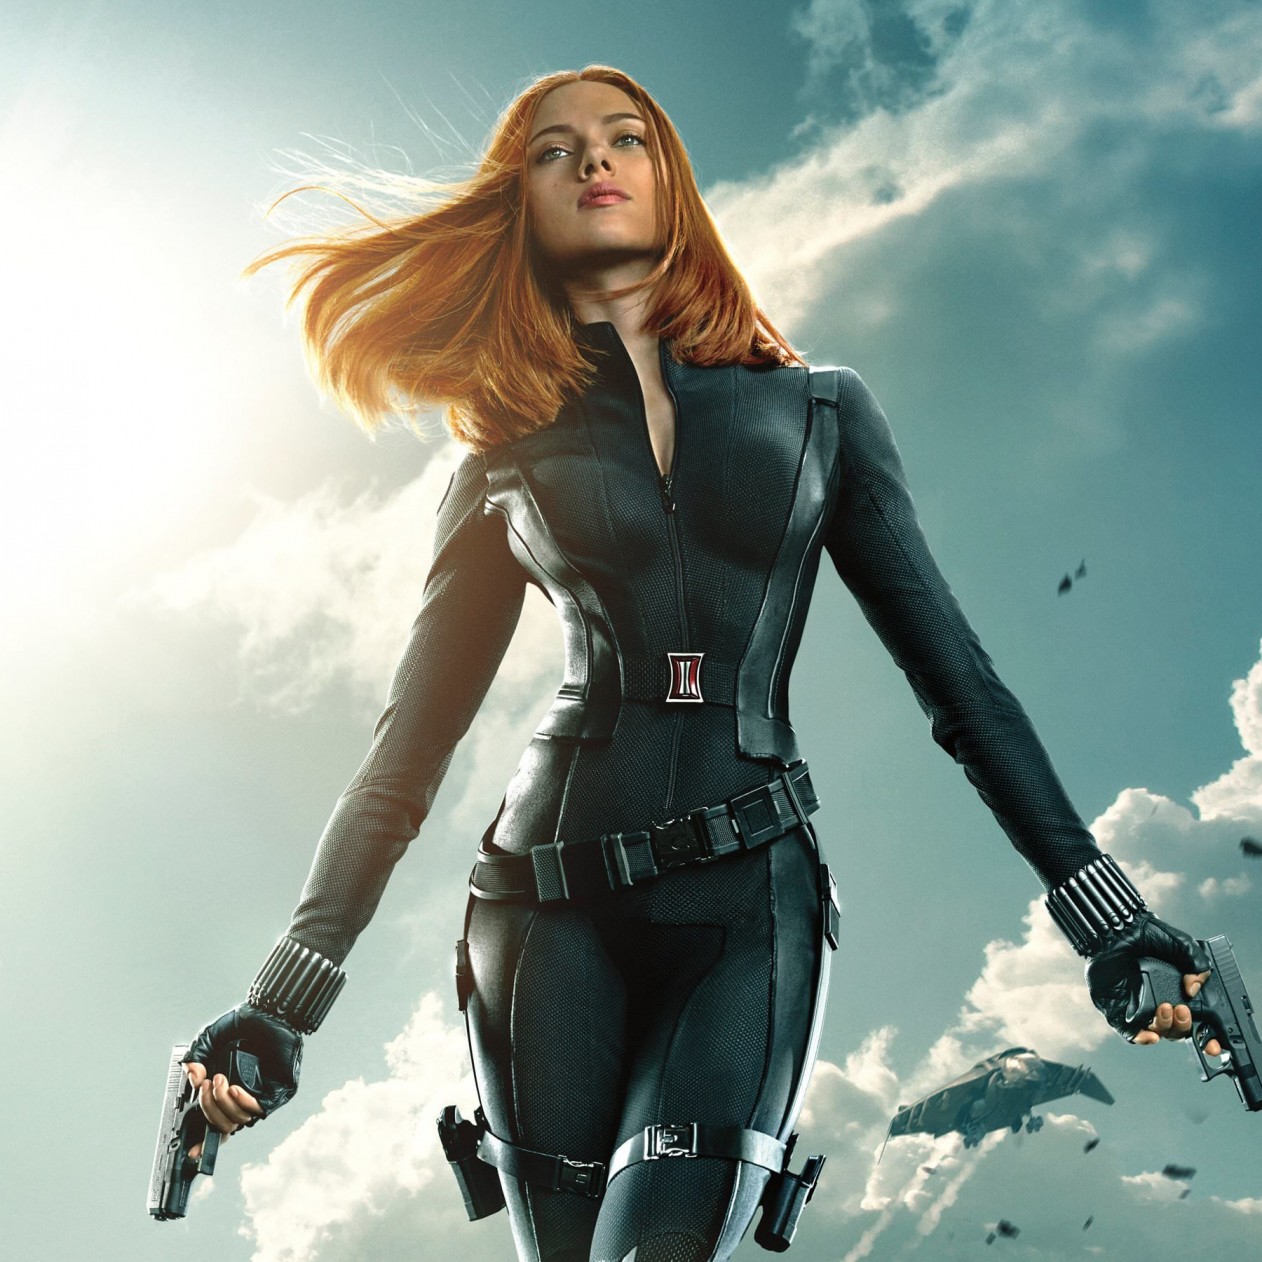 Scarlett Johansson in "Captain America: The Winter Soldier" Wallpaper for Apple iPad mini